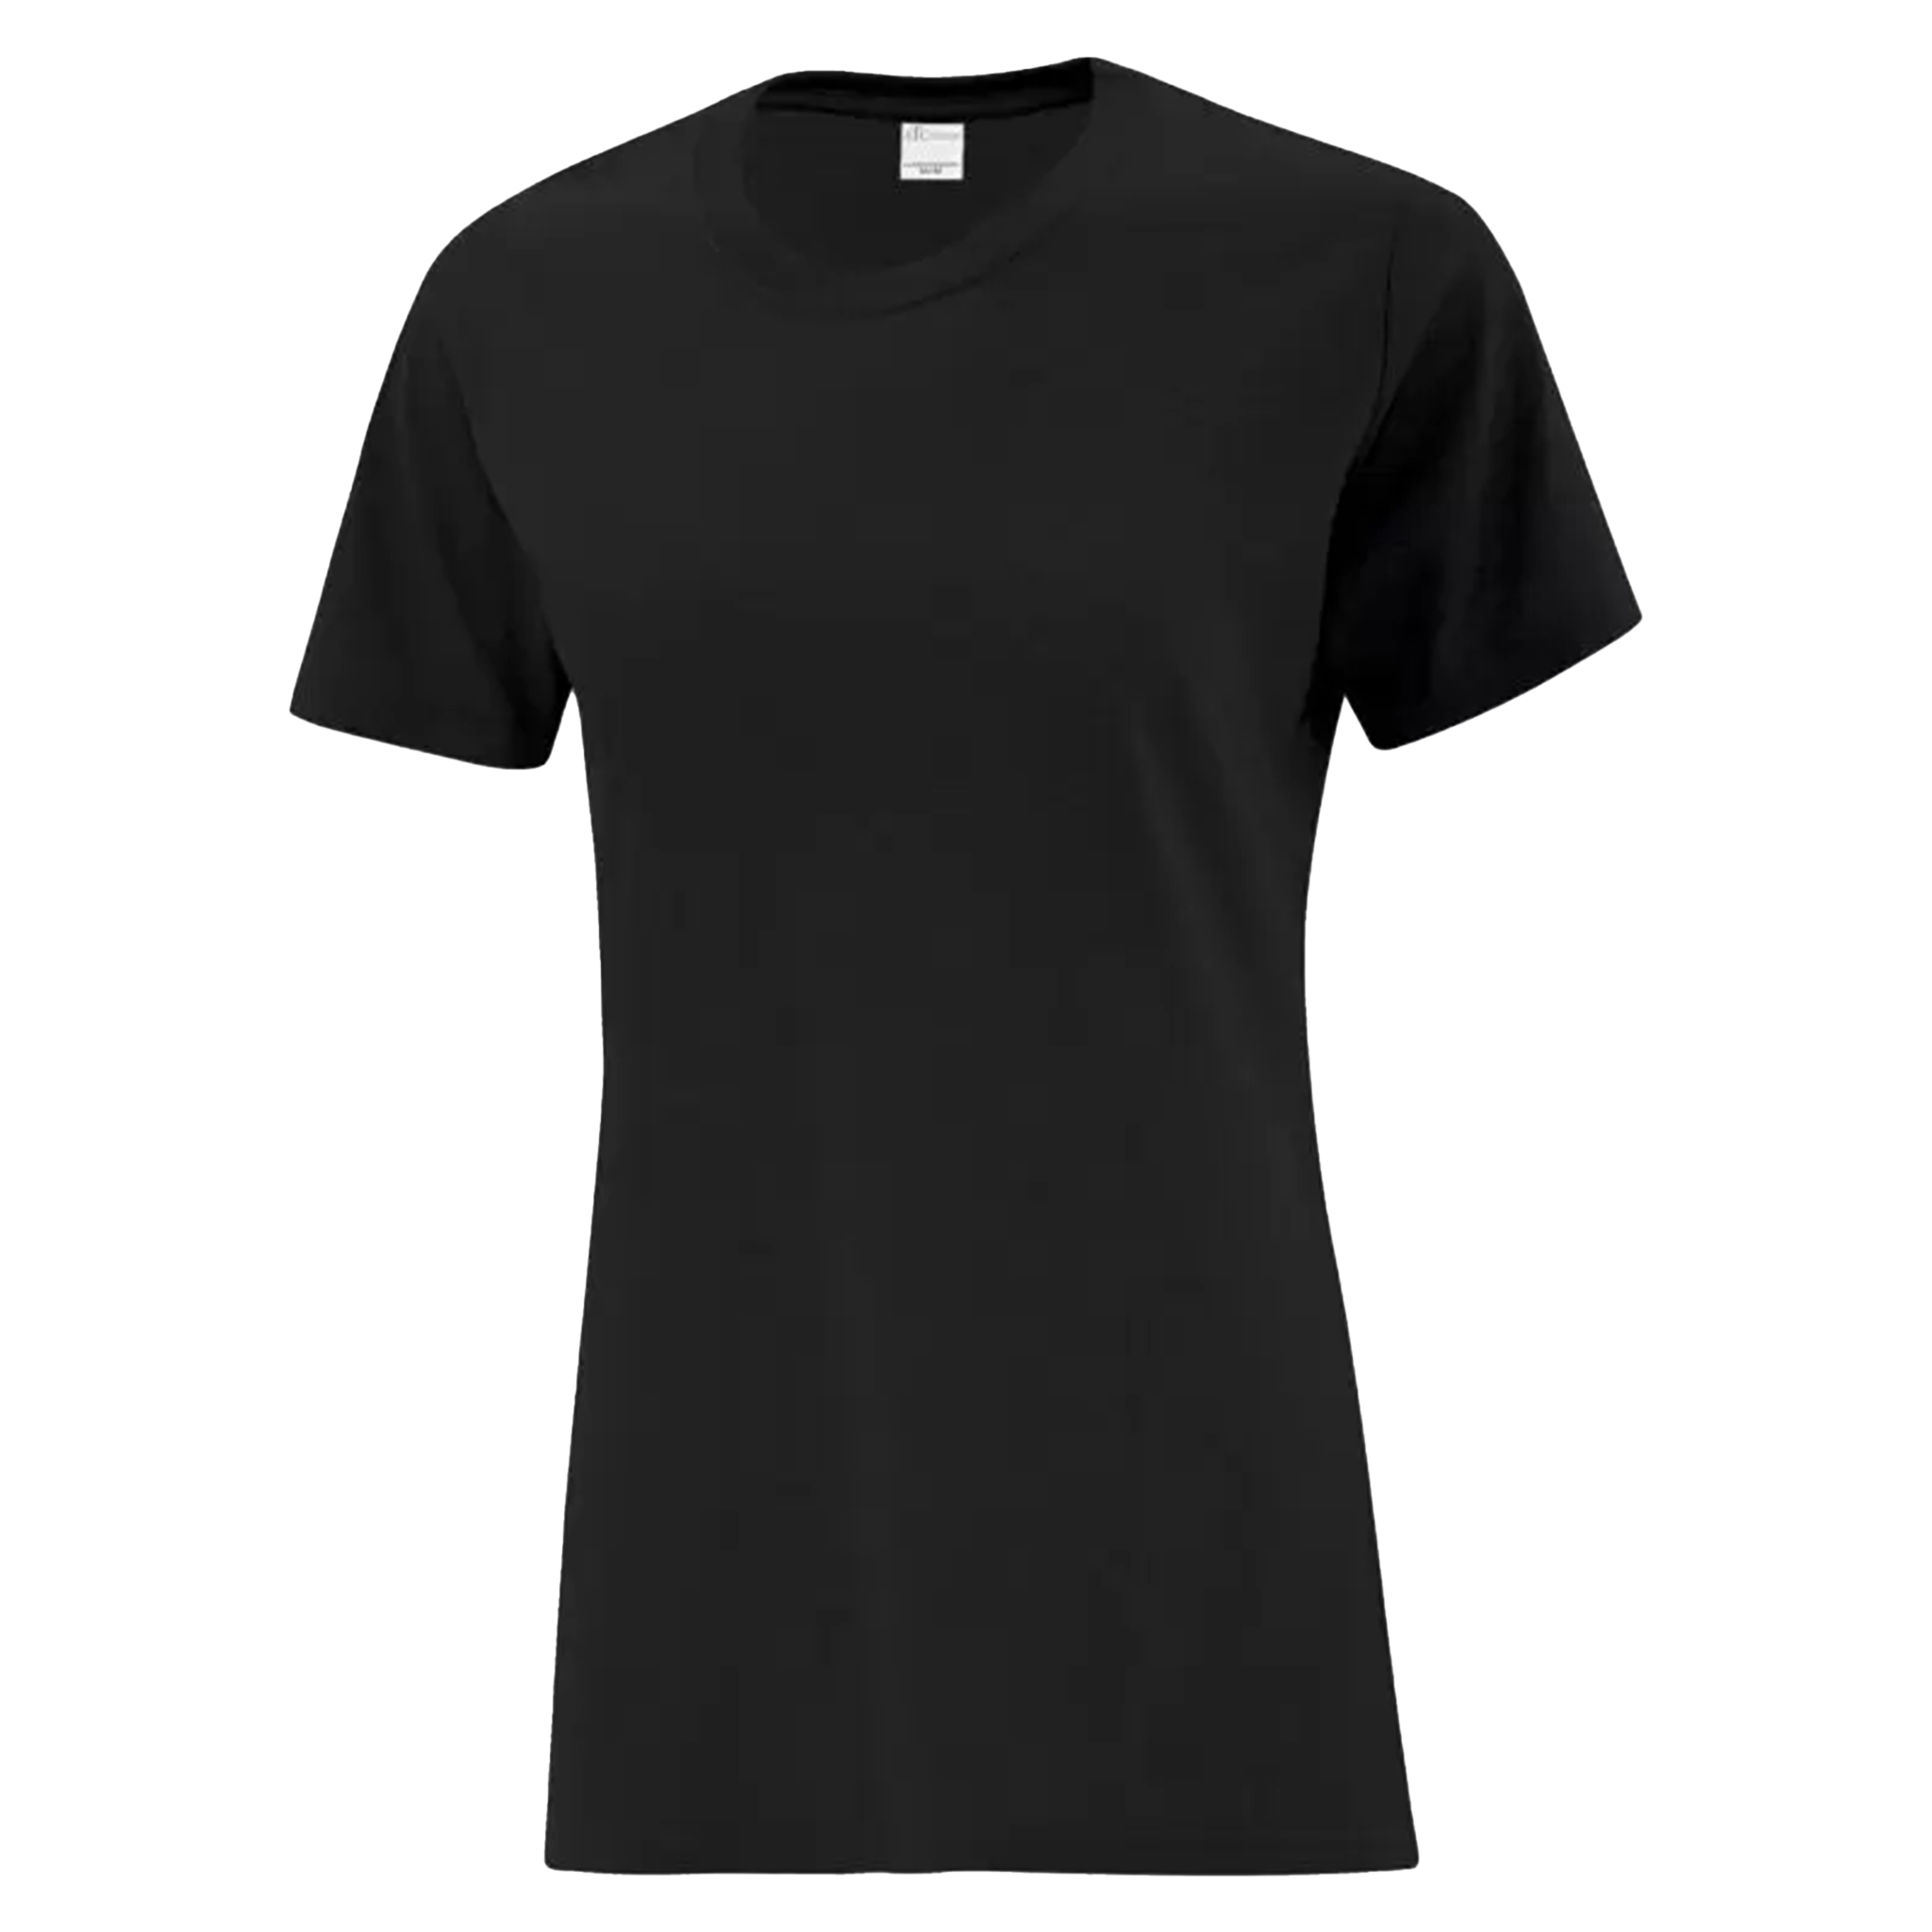 ATC Everyday Cotton T-Shirt - Women's Sizing XS-4XL - Black